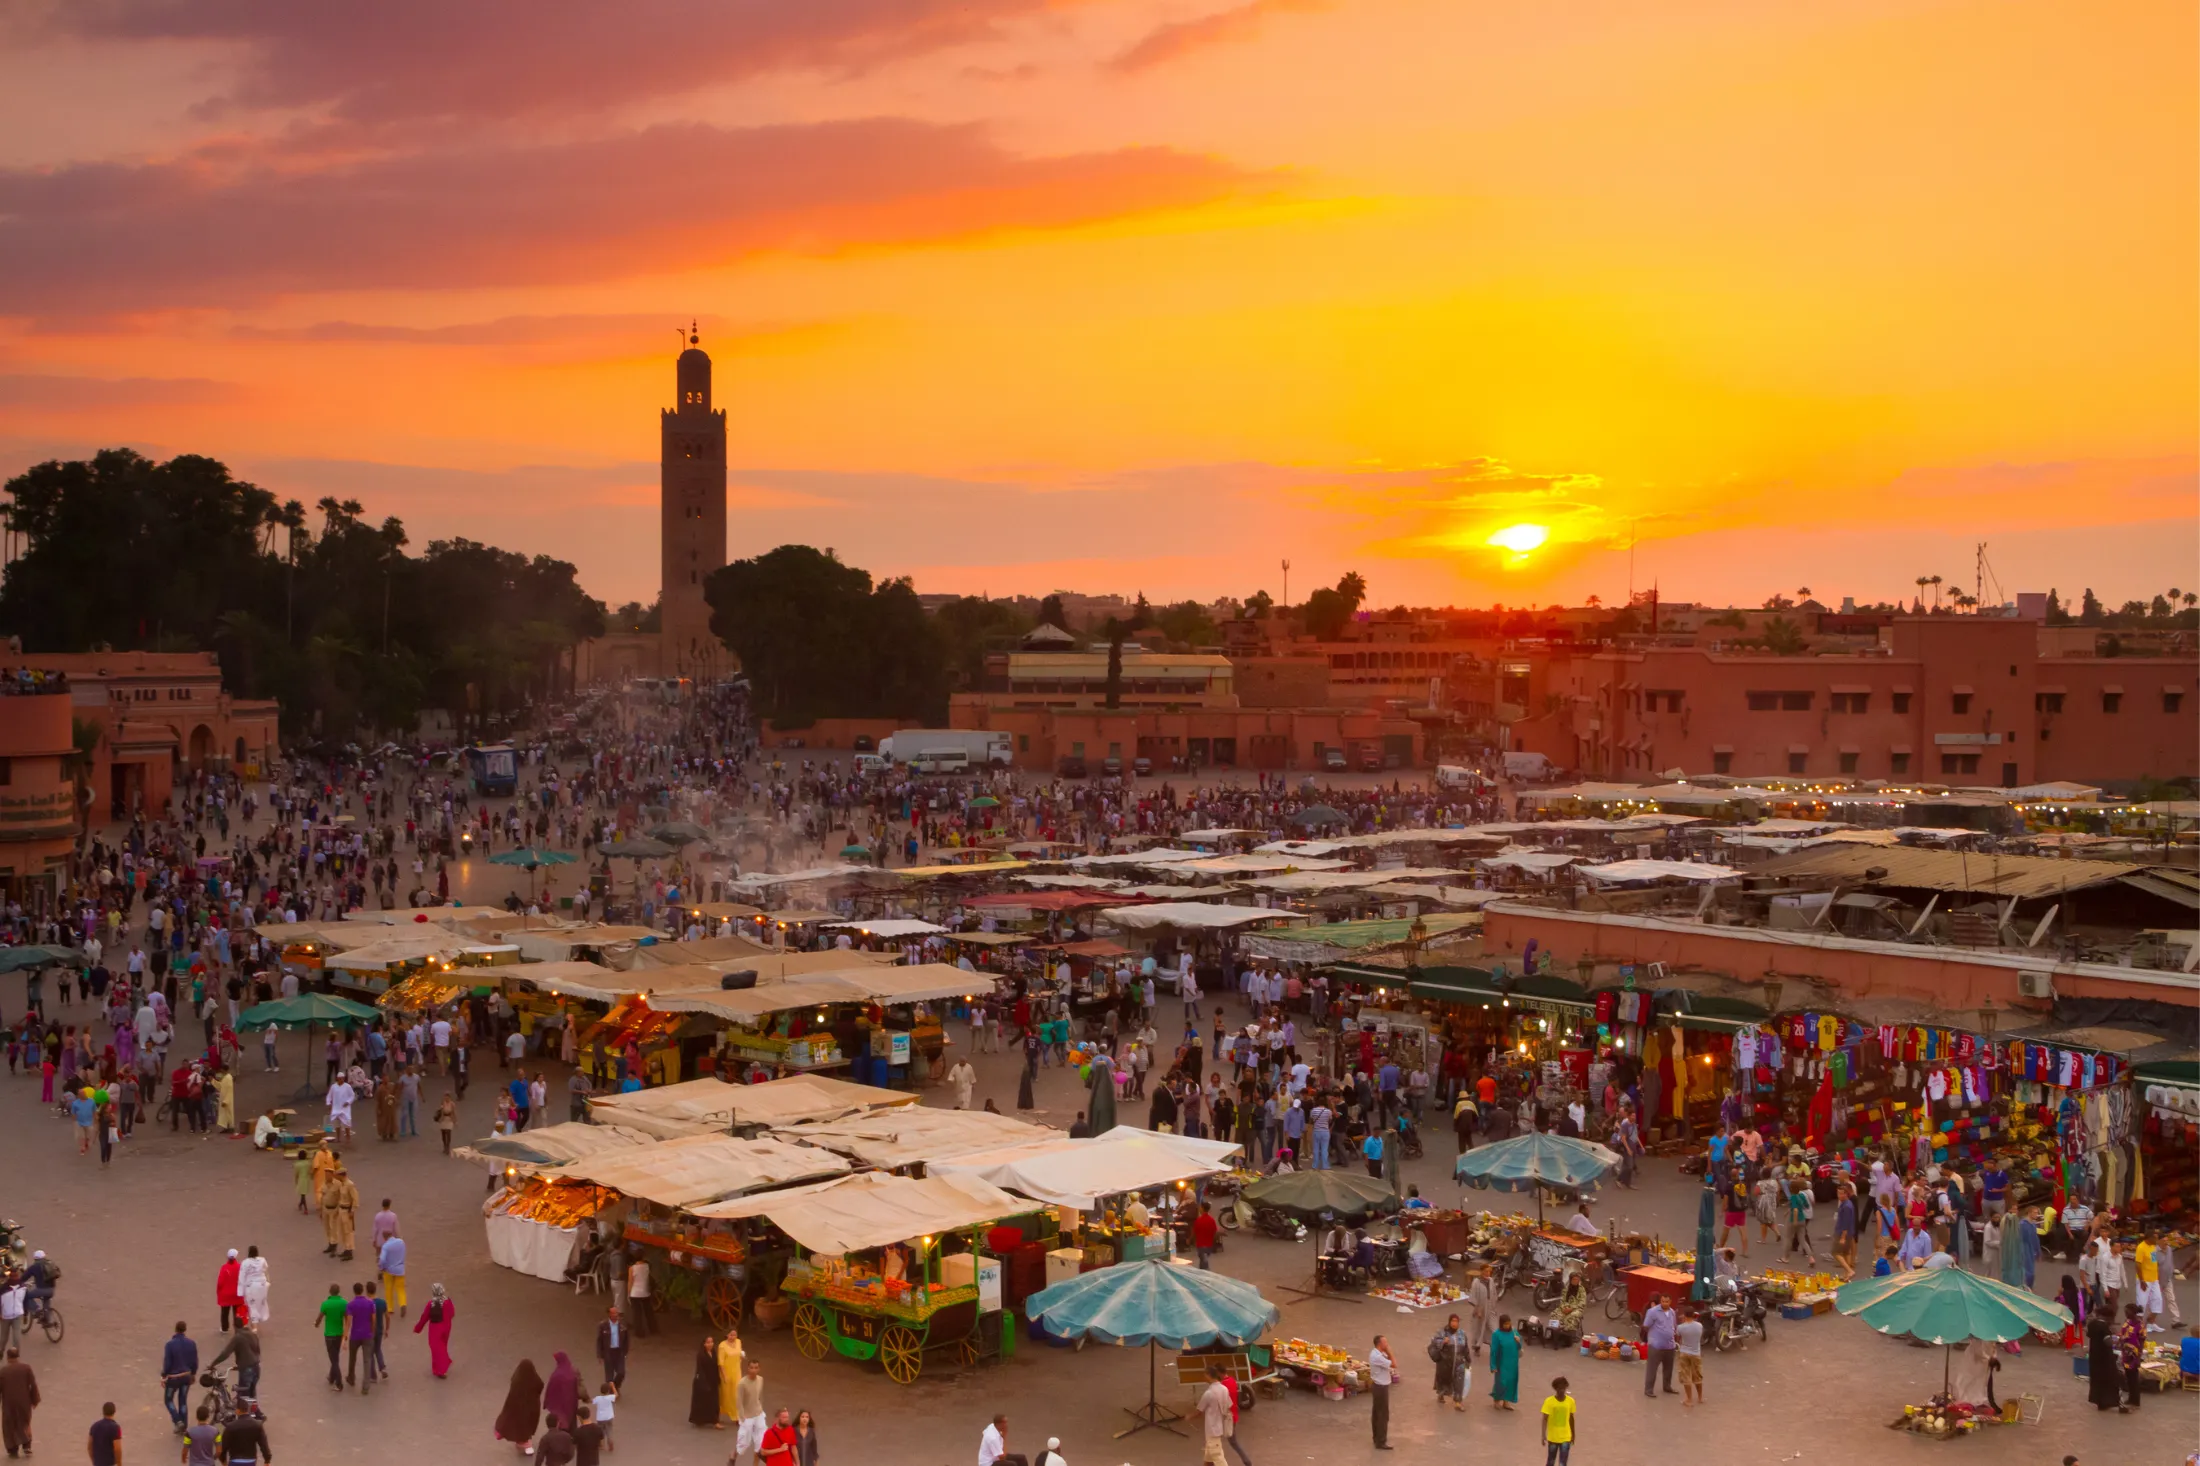 A bustling market in Marrakesh, Morocco.